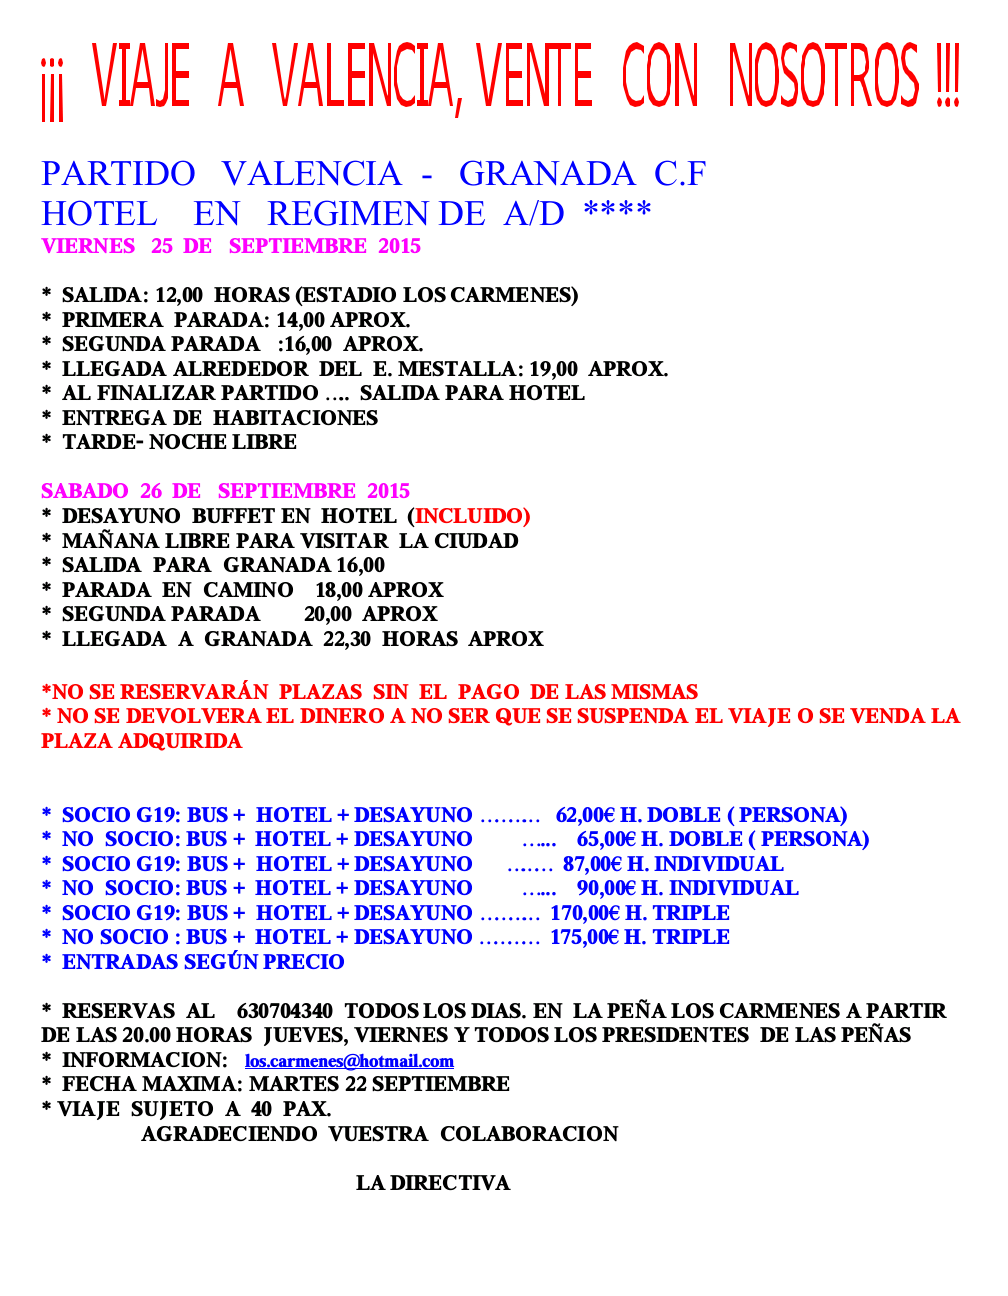 Viaje Valencia - Granada C.F.